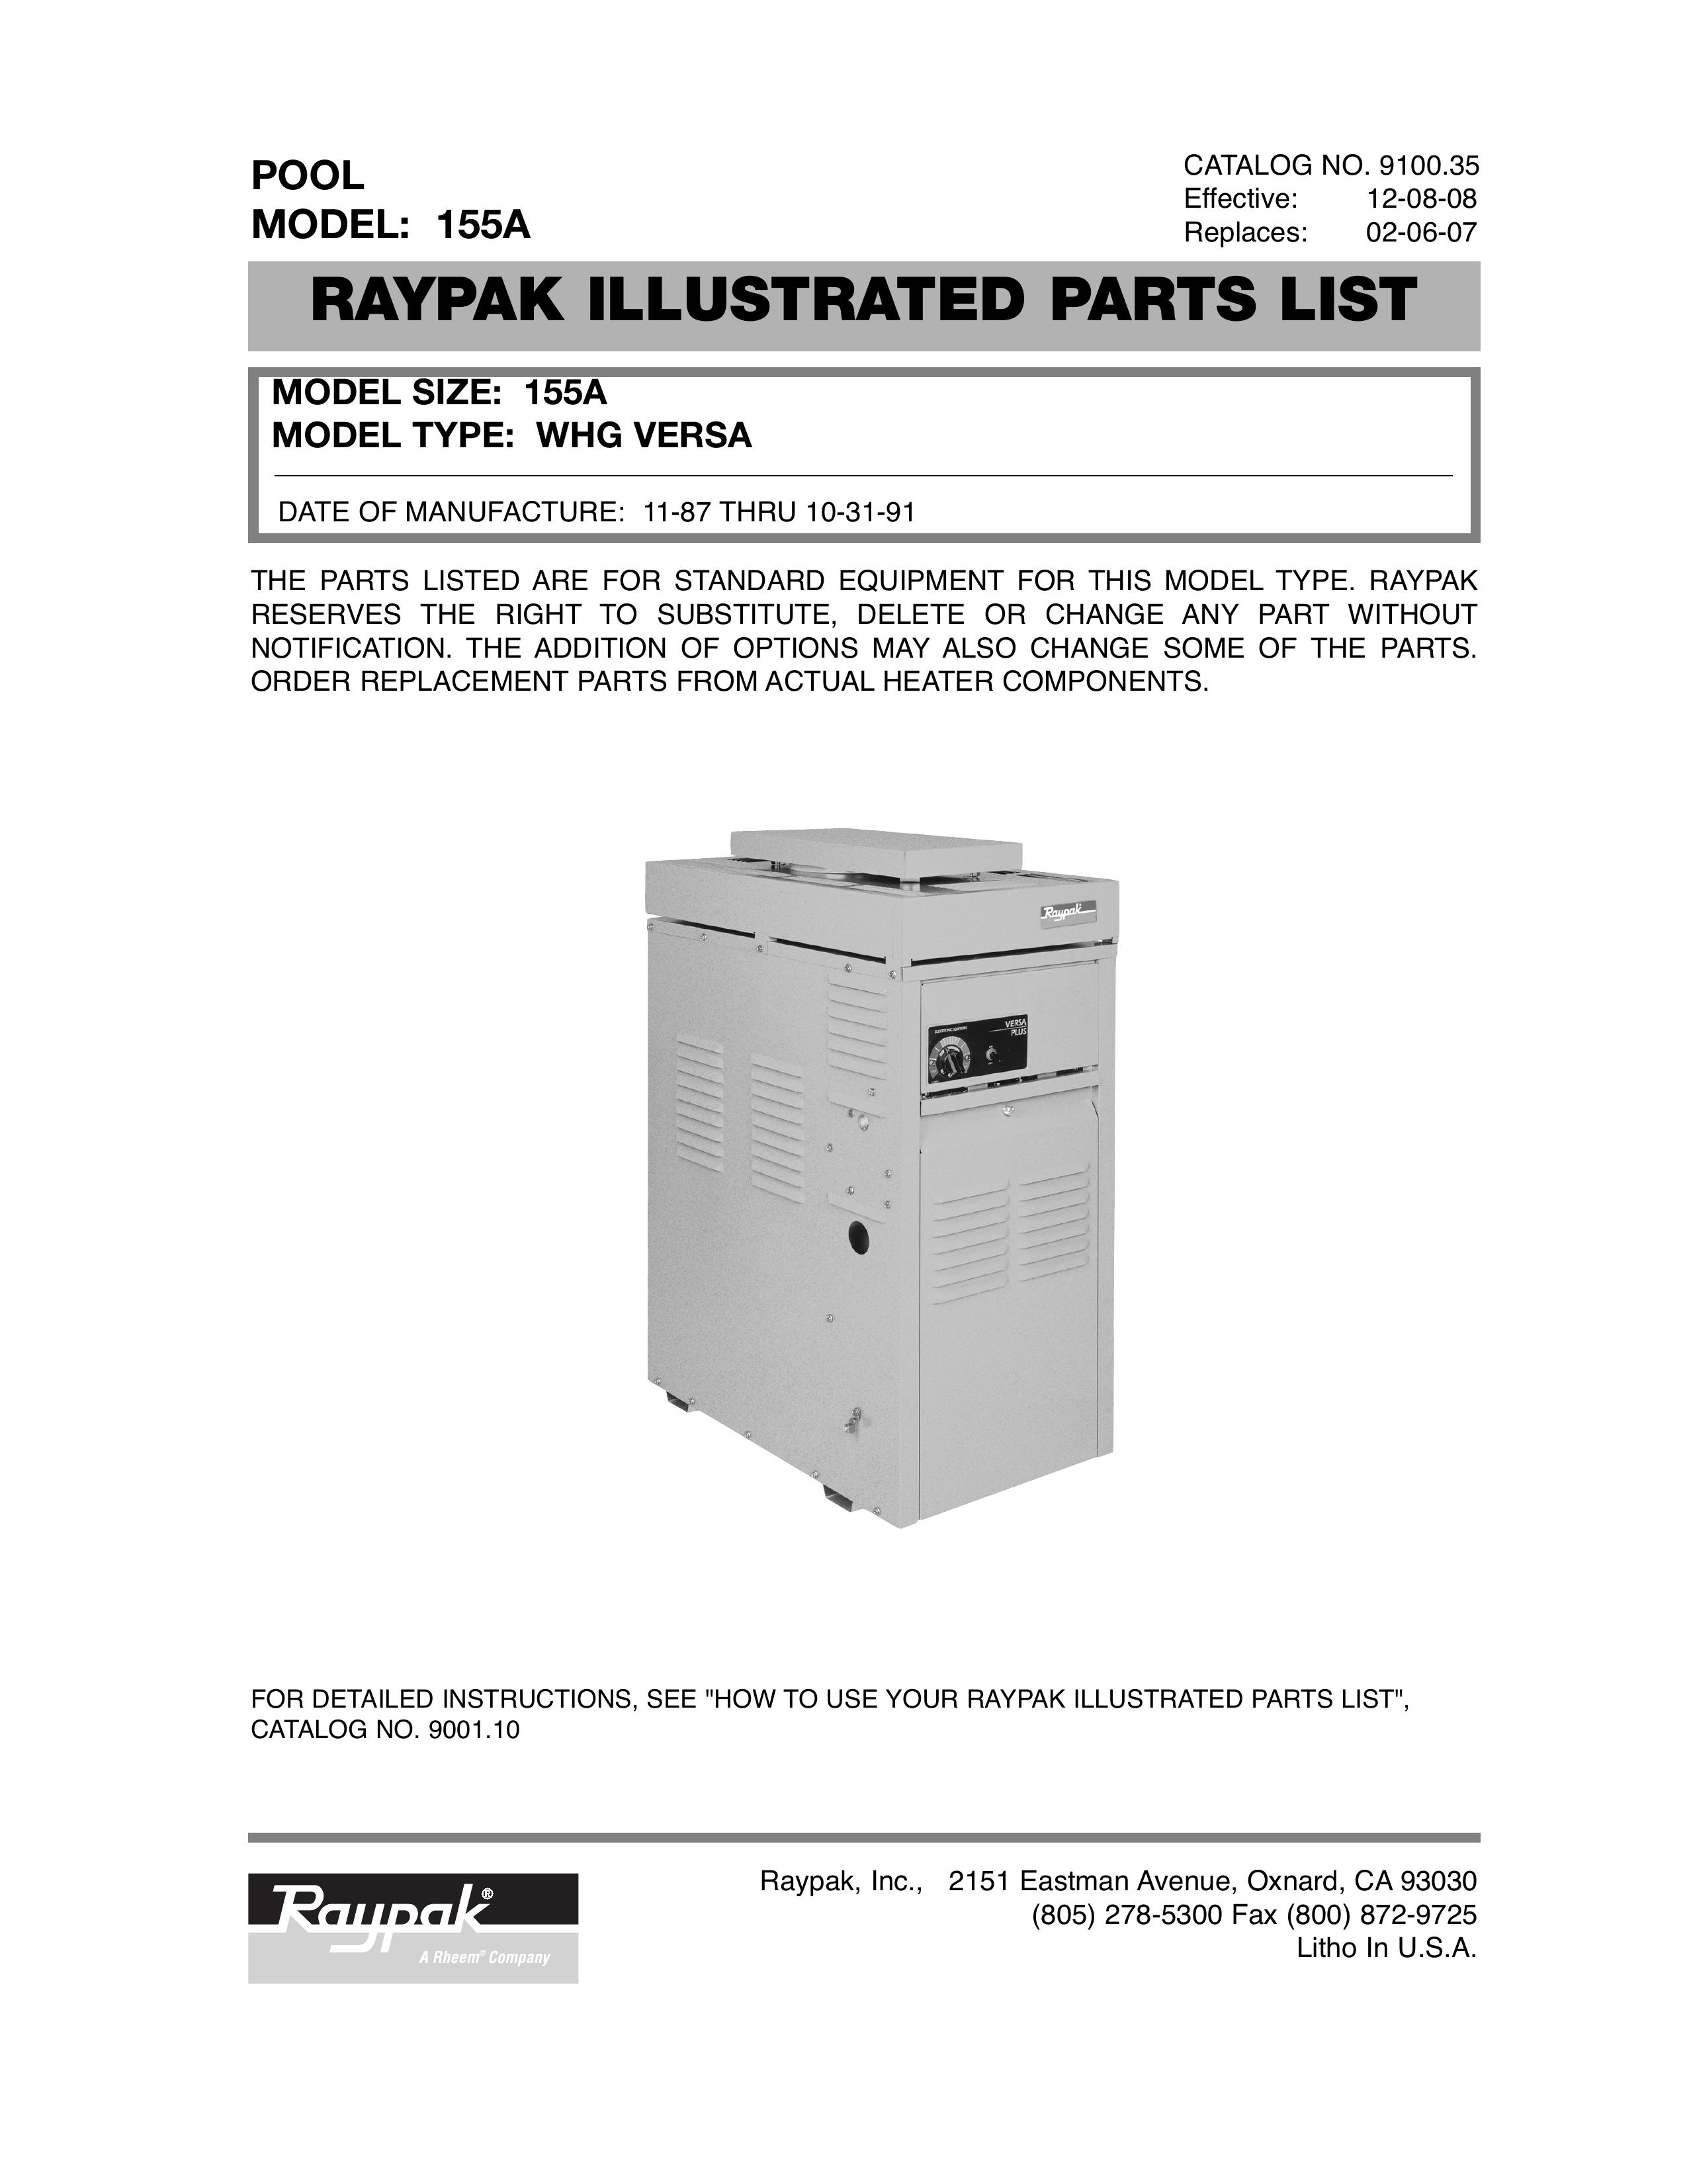 Raypak 155A Swimming Pool Heater User Manual